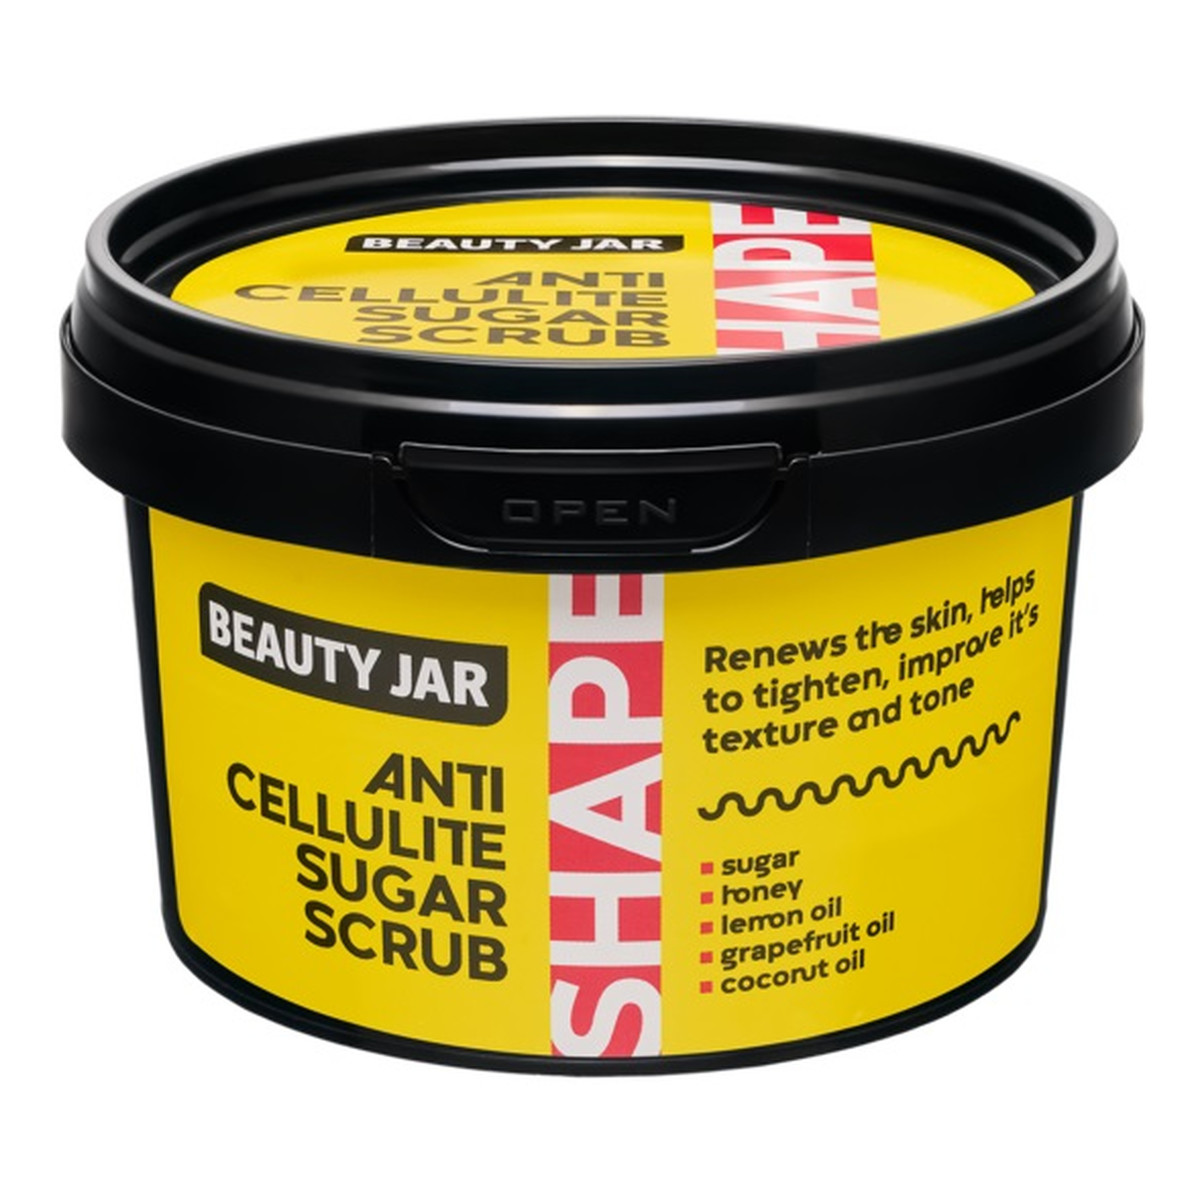 Beauty Jar Anti-cellulite sugar scrub cukrowy peeling antycellulitowy do ciała 250g